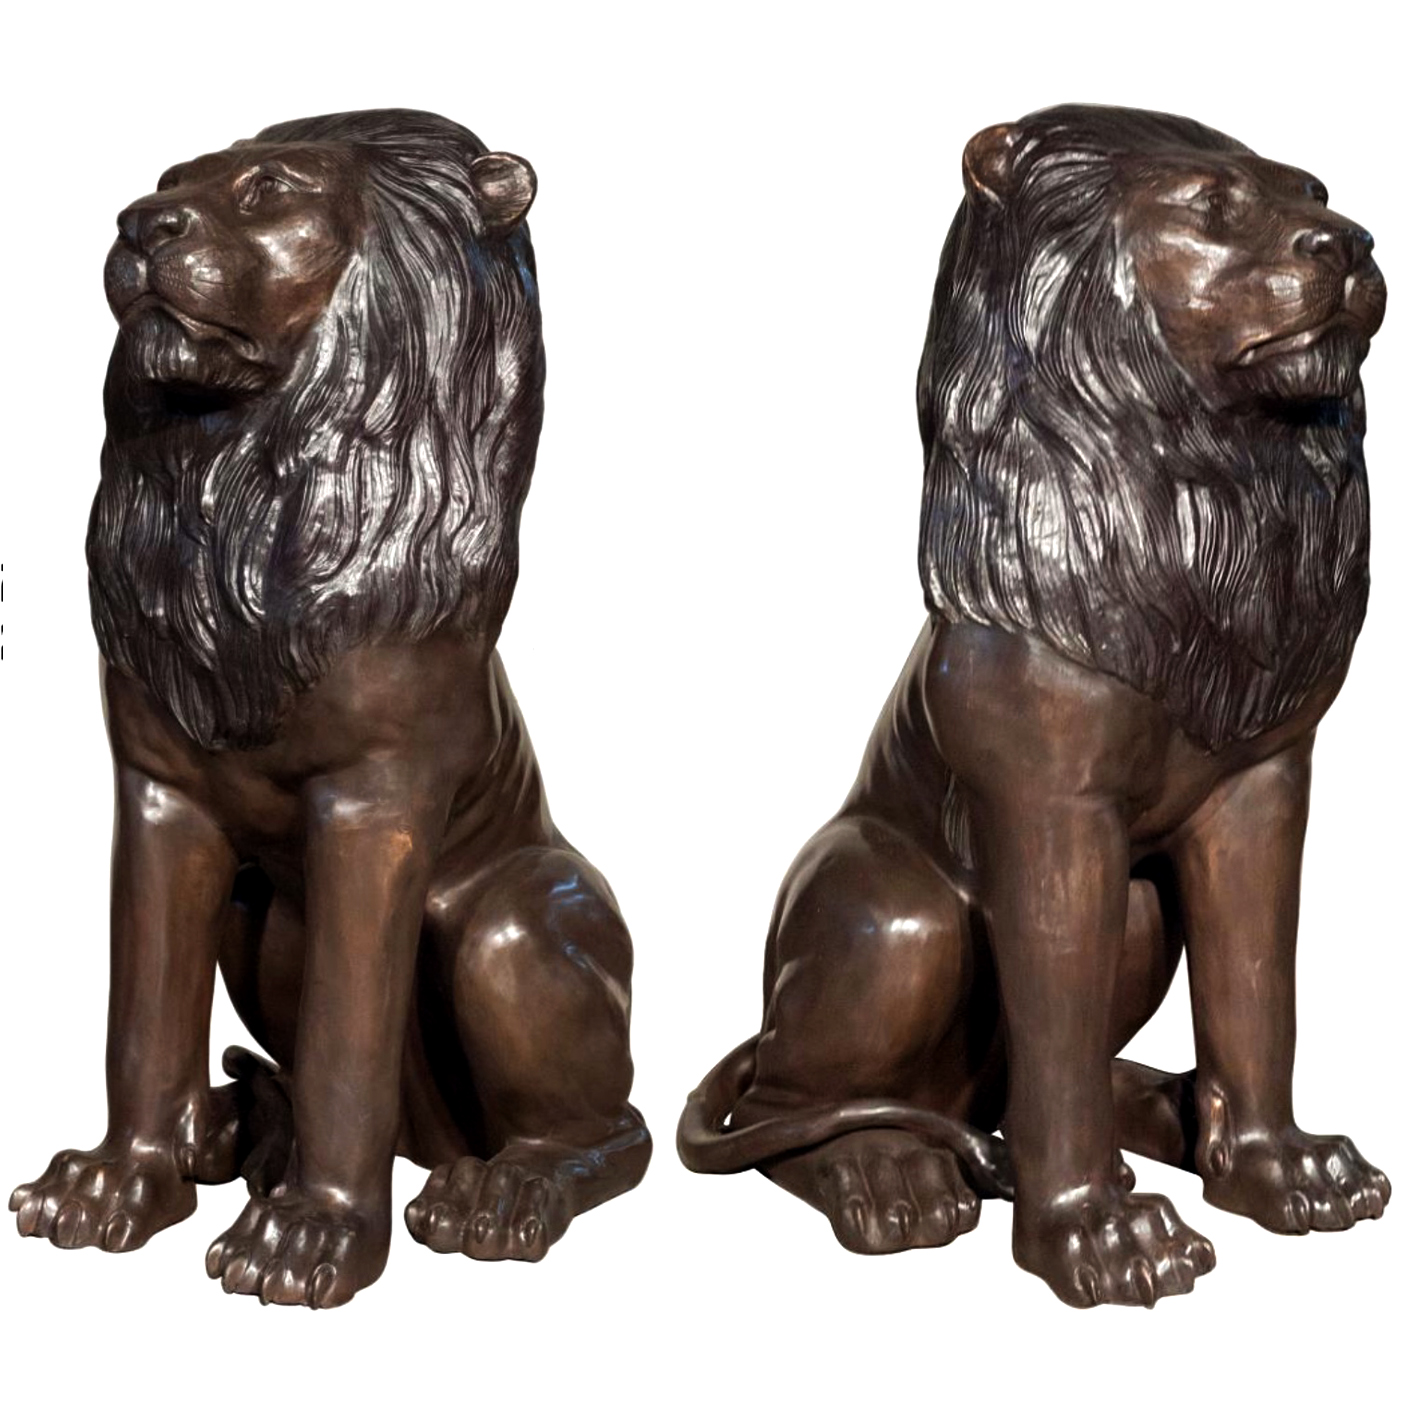 SRB074220L&R Bronze Sitting Lions Sculpture Set Metropolitan Galleries Inc.